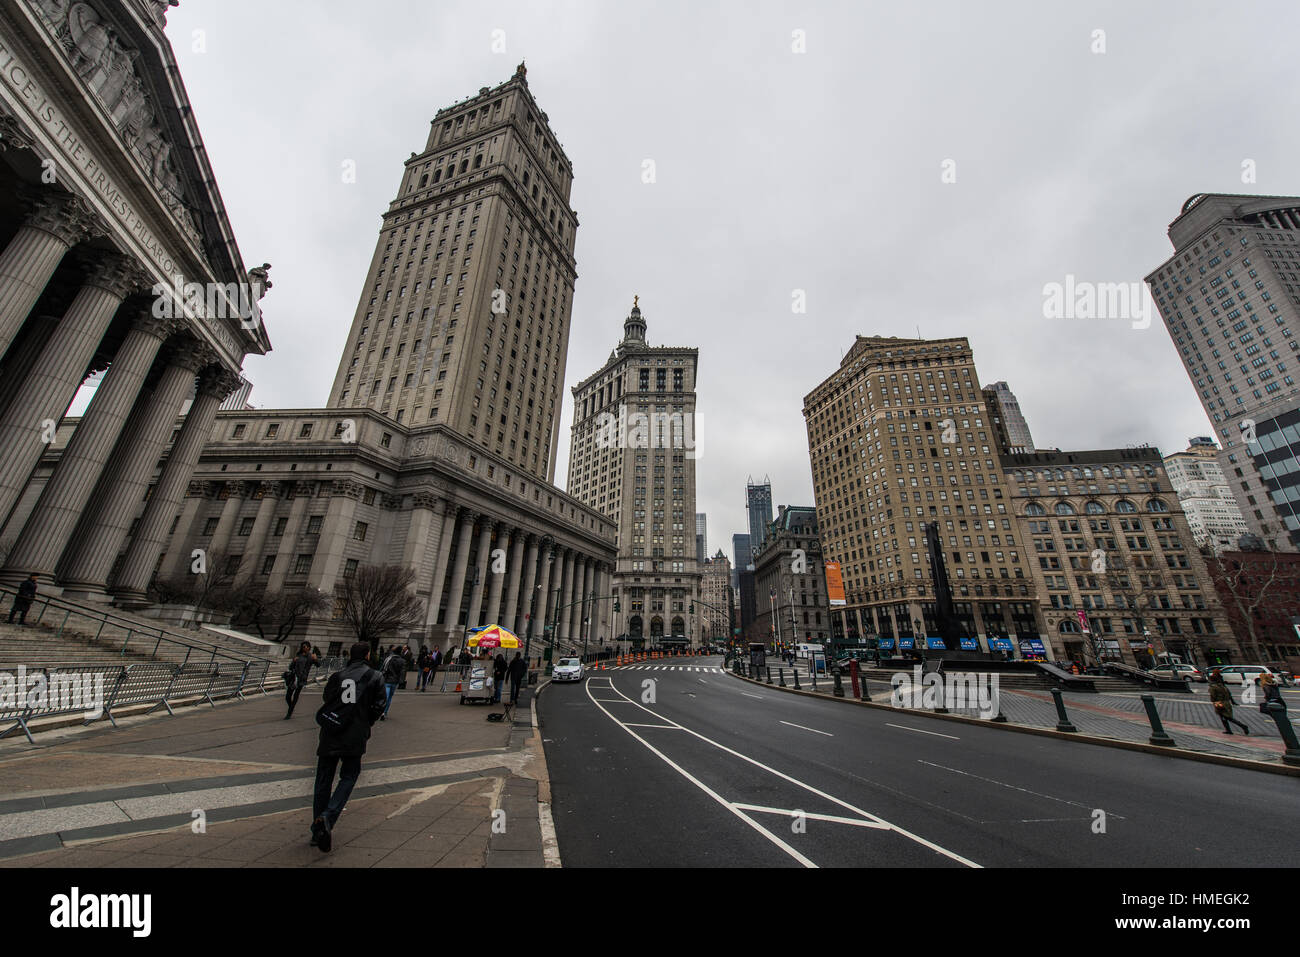 New York city town hall and surrounding Stock Photo